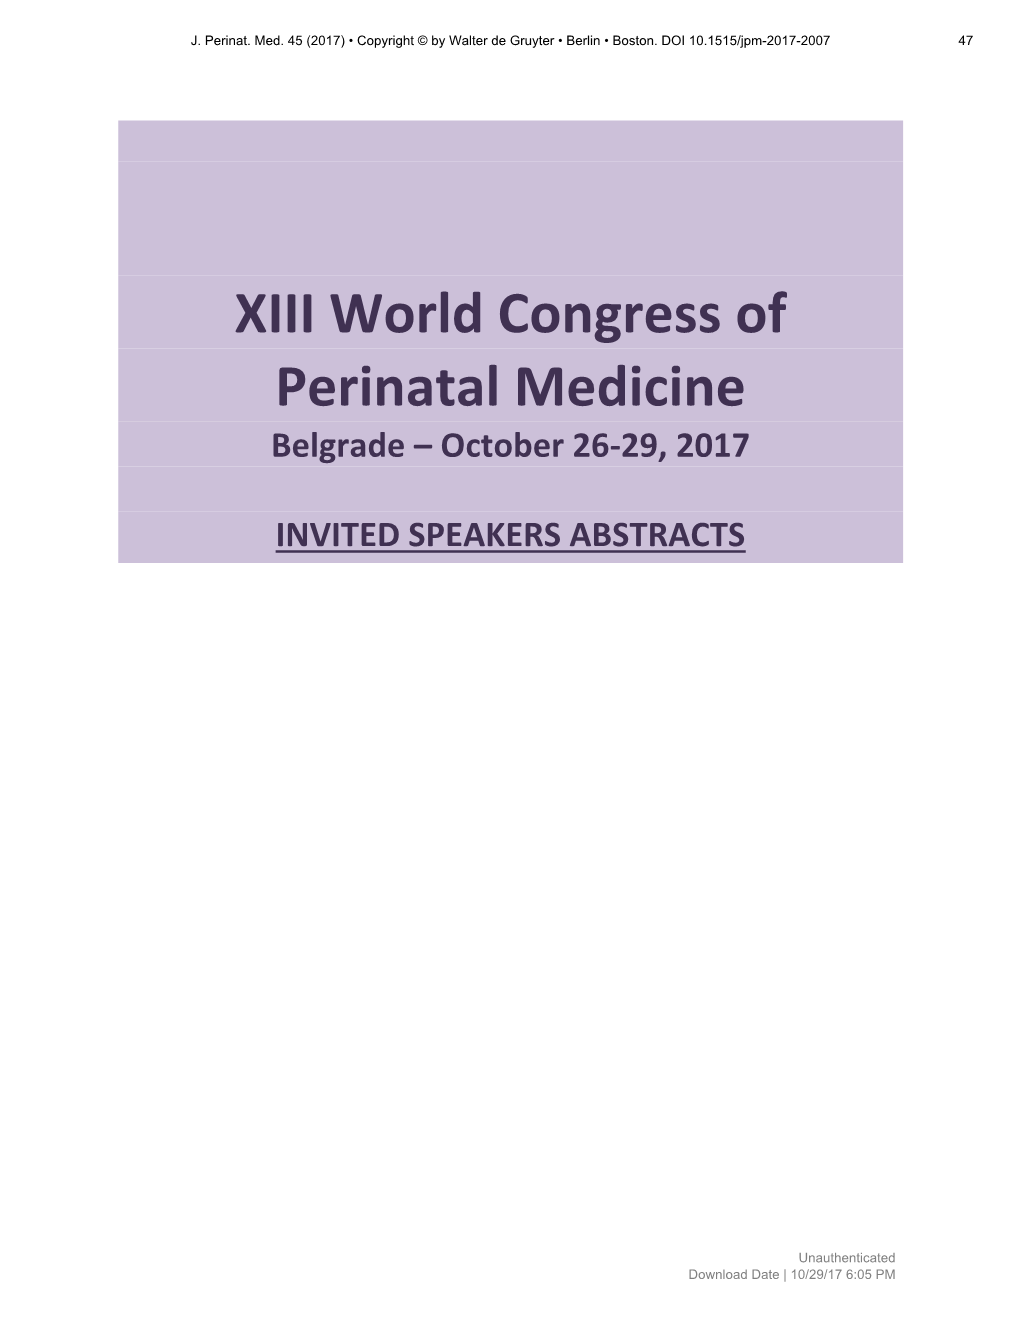 XIII World Congress of Perinatal Medicine Belgrade – October 26-29, 2017